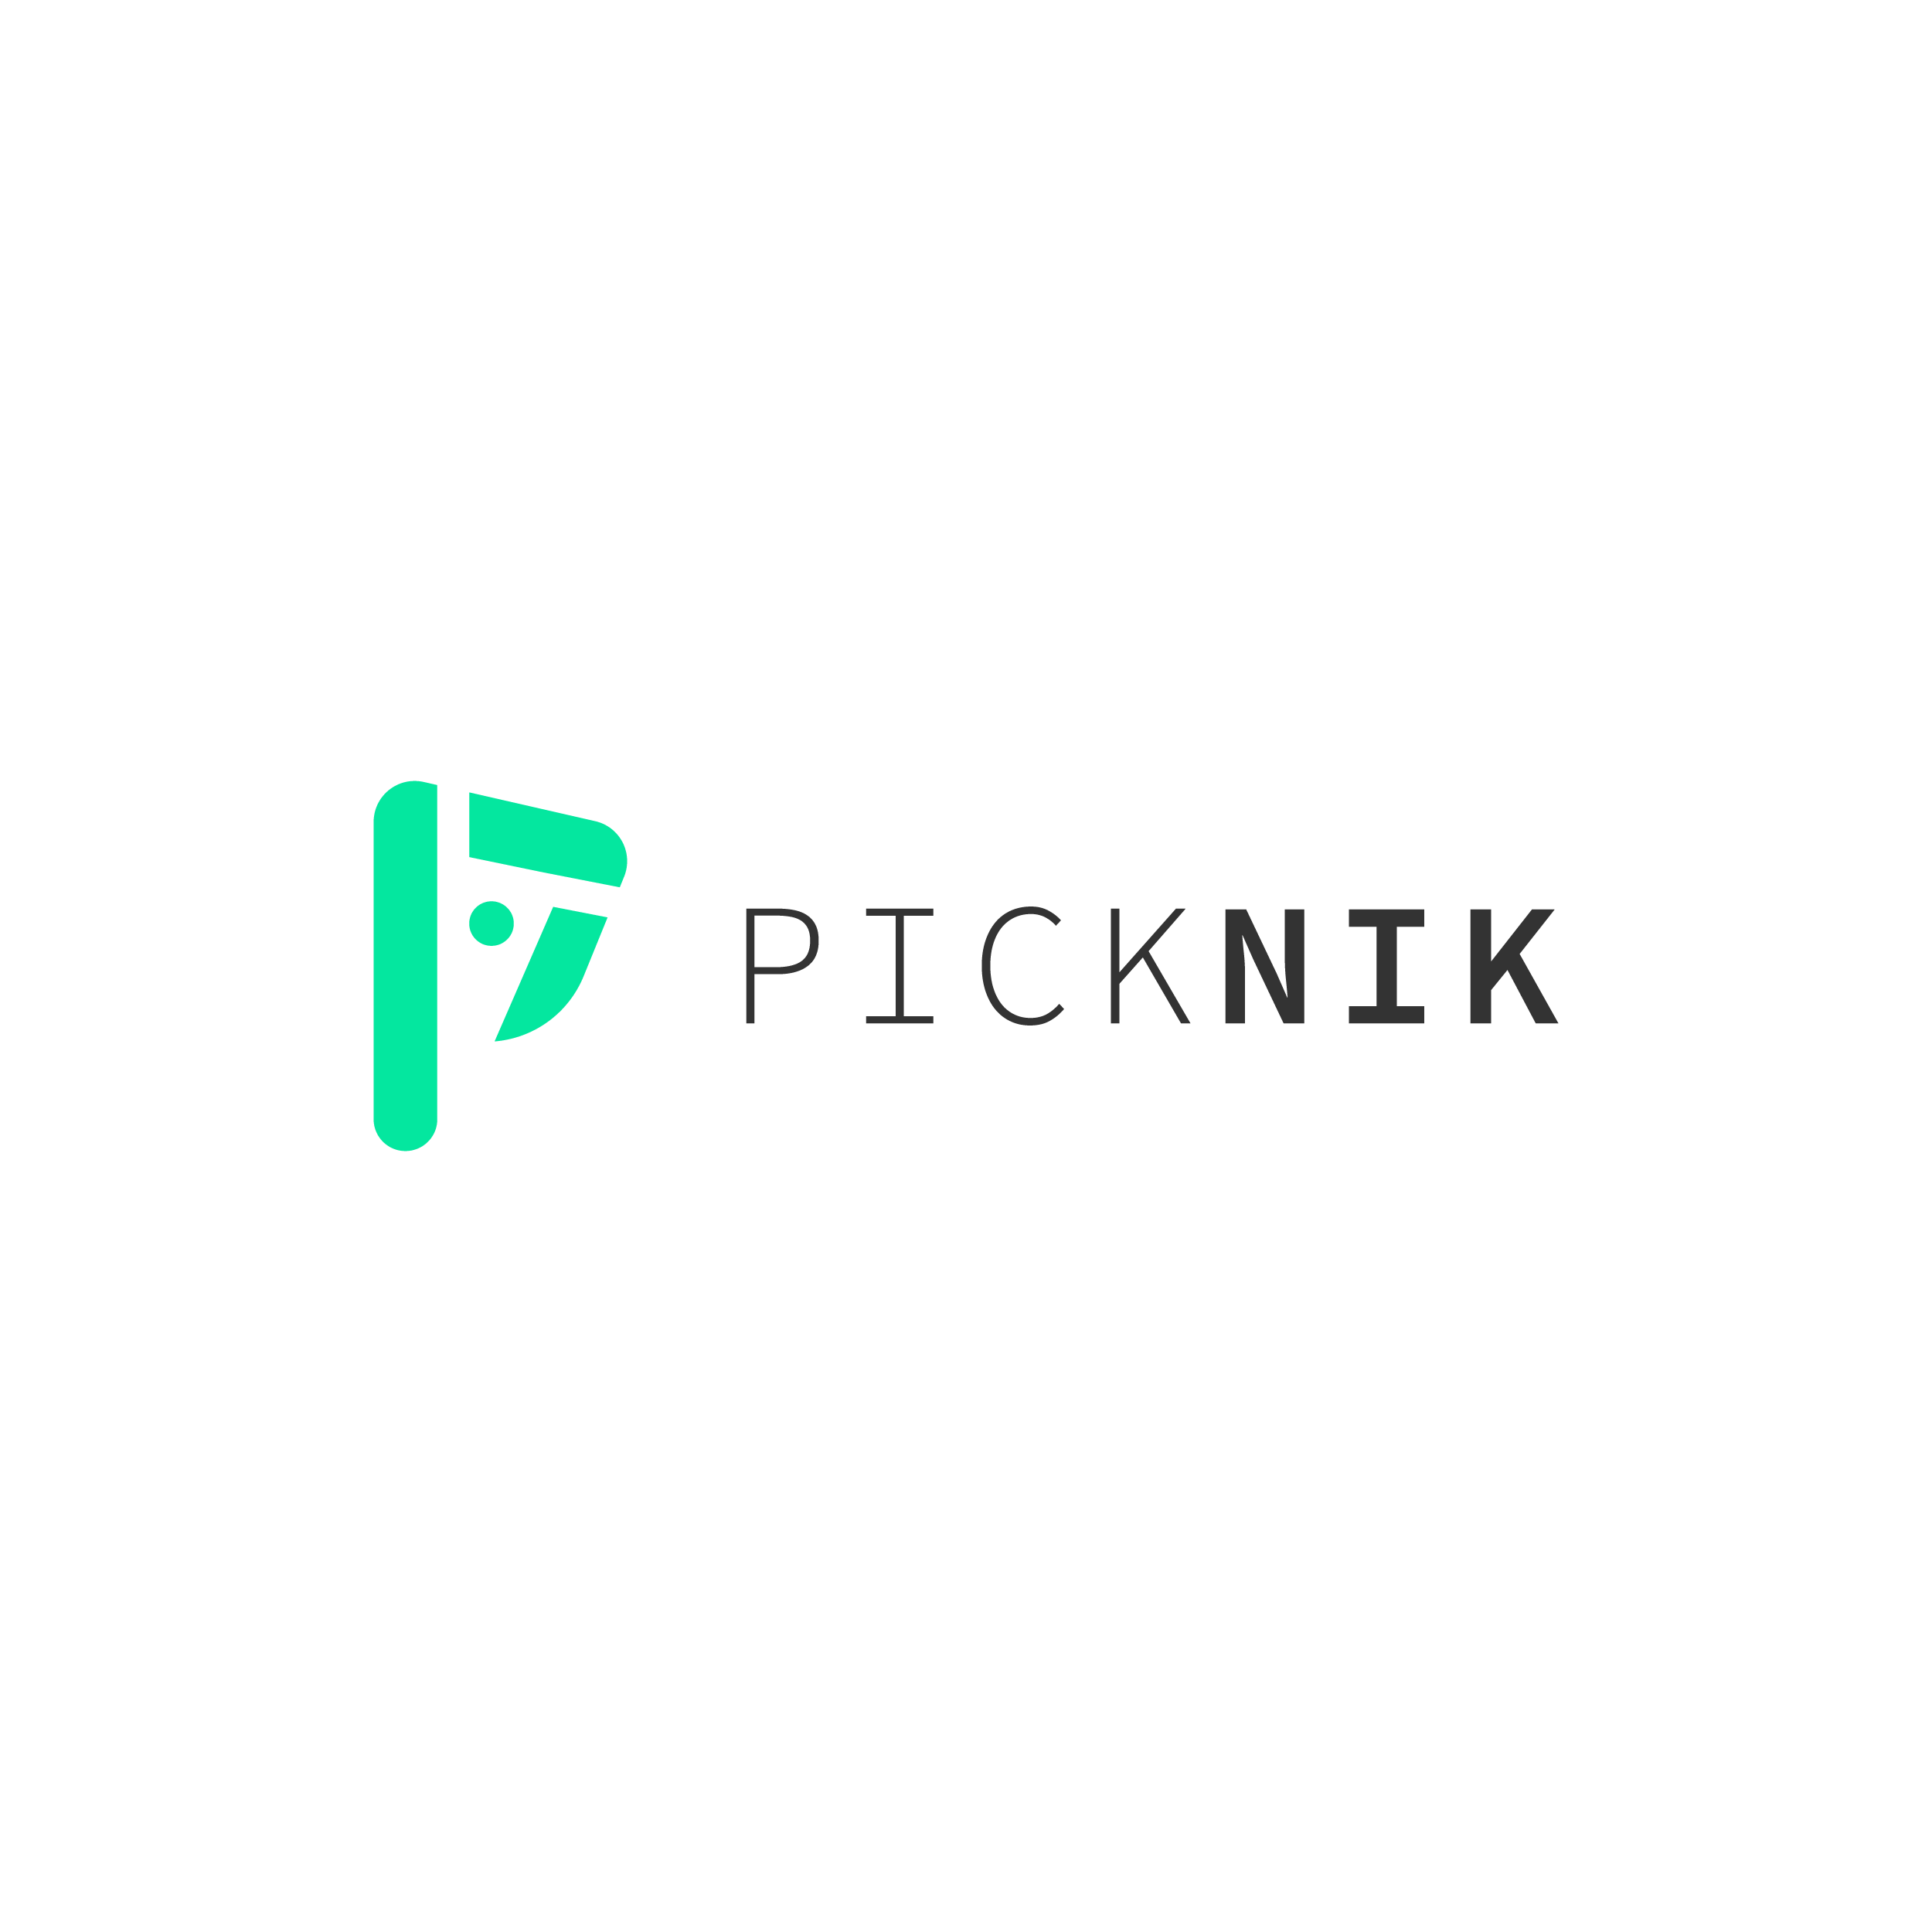 "PickNik Robotics"